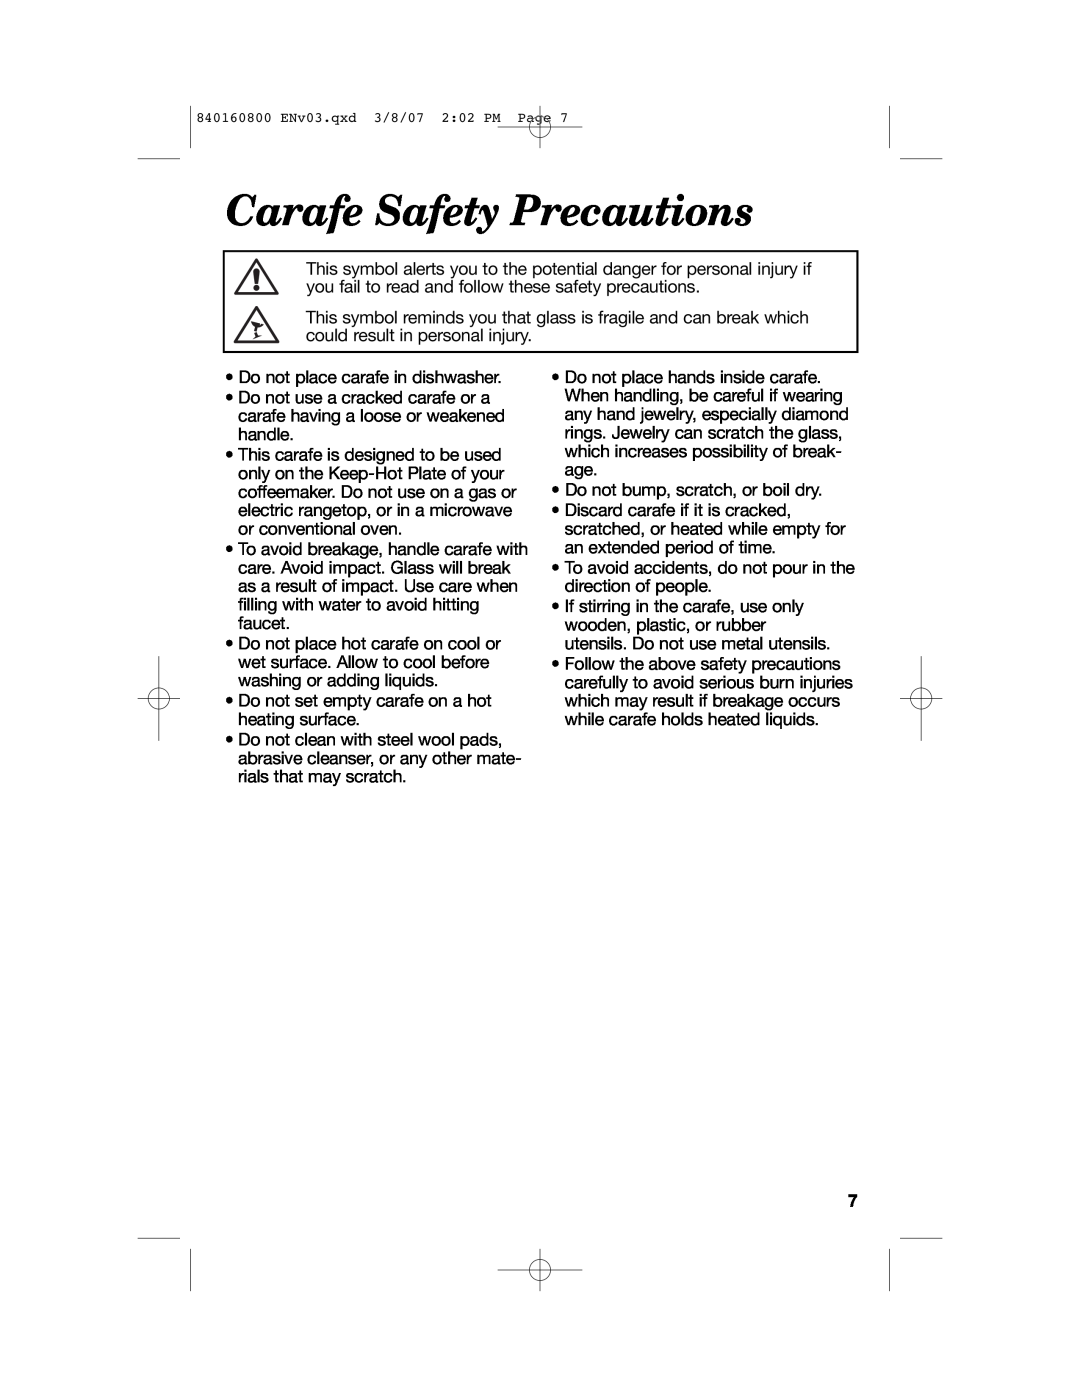 Hamilton Beach 840160800 manual Carafe Safety Precautions 